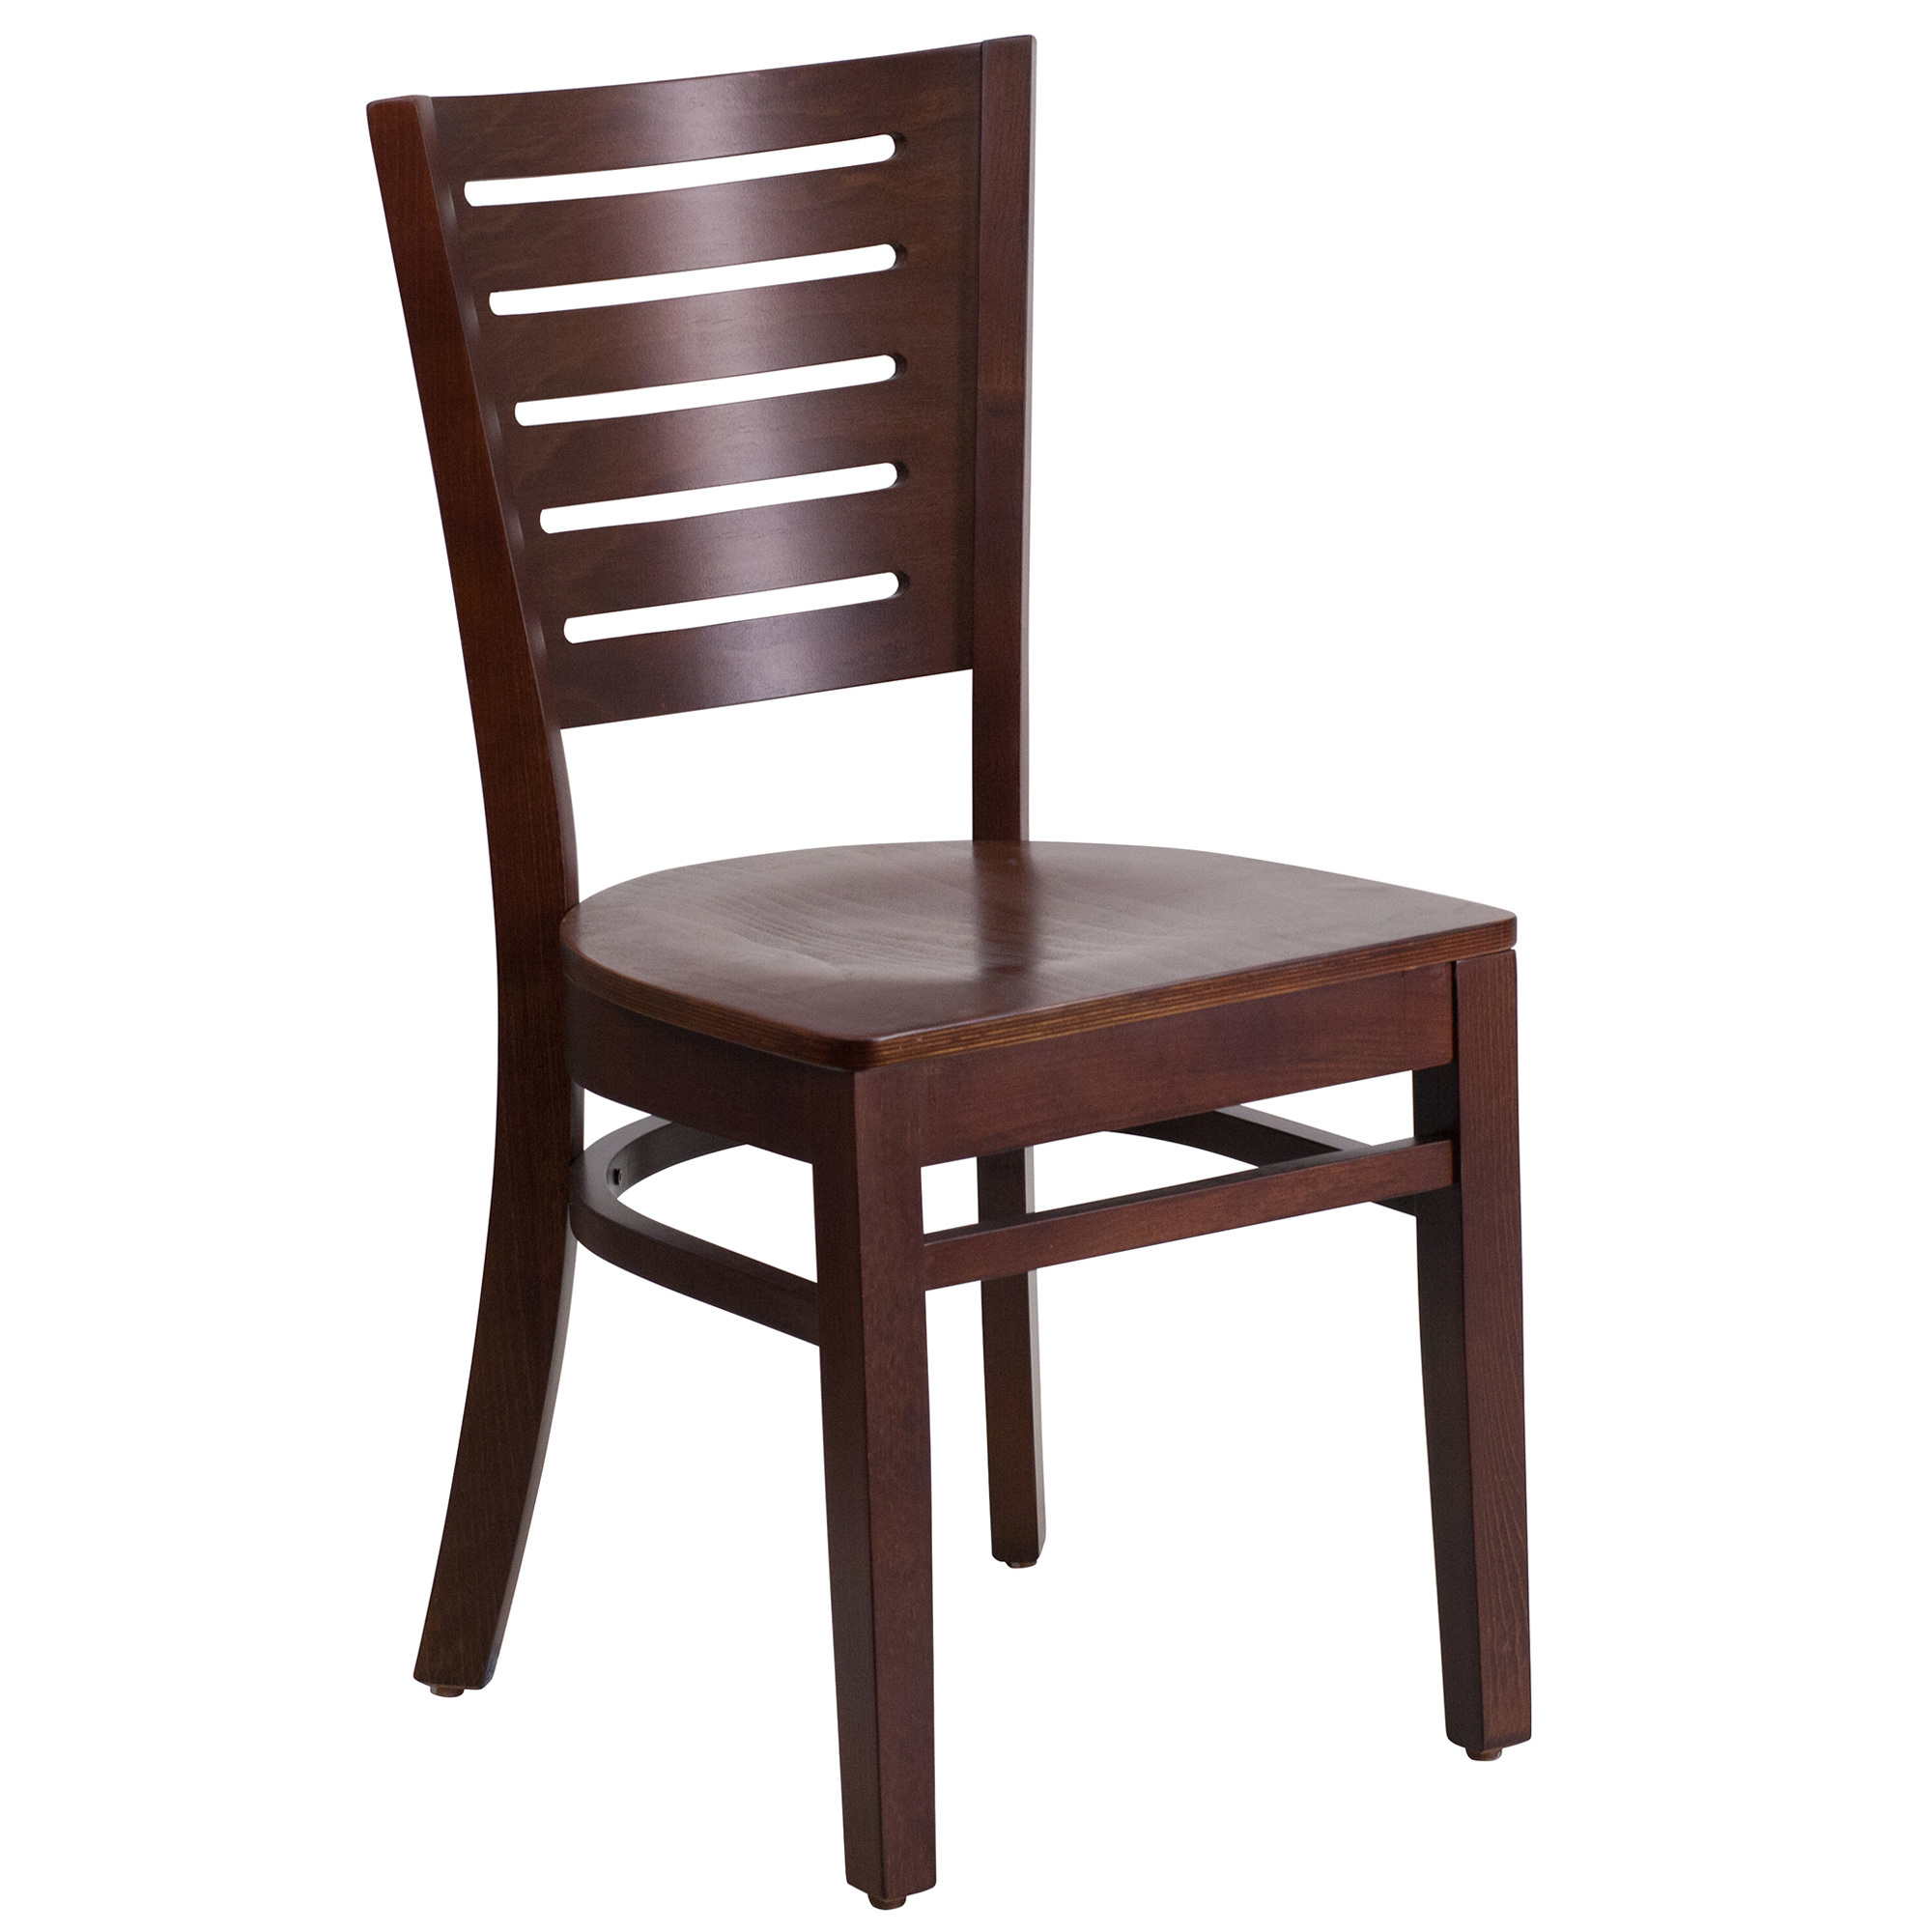 Slat Back Wood Dining Chair — Walnut Finish, 800-Lb. Capacity, 17 1/4Inch W x 20 1/2Inch D x 33 1/2Inch H, Model - Flash Furniture XUDGW018WAL